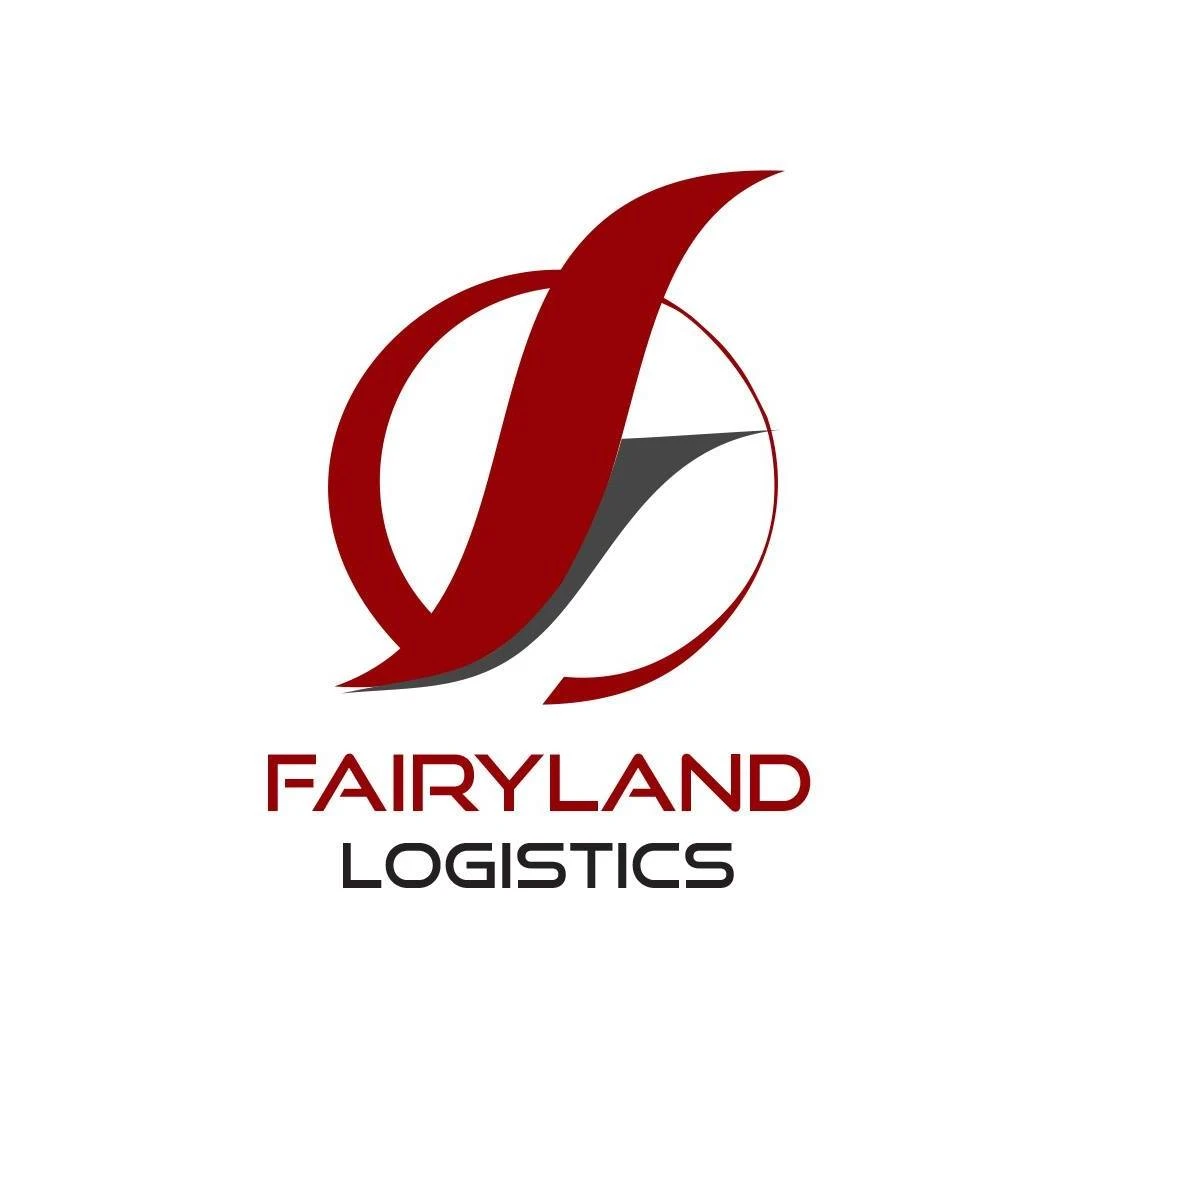 Fairyland Logistics Group